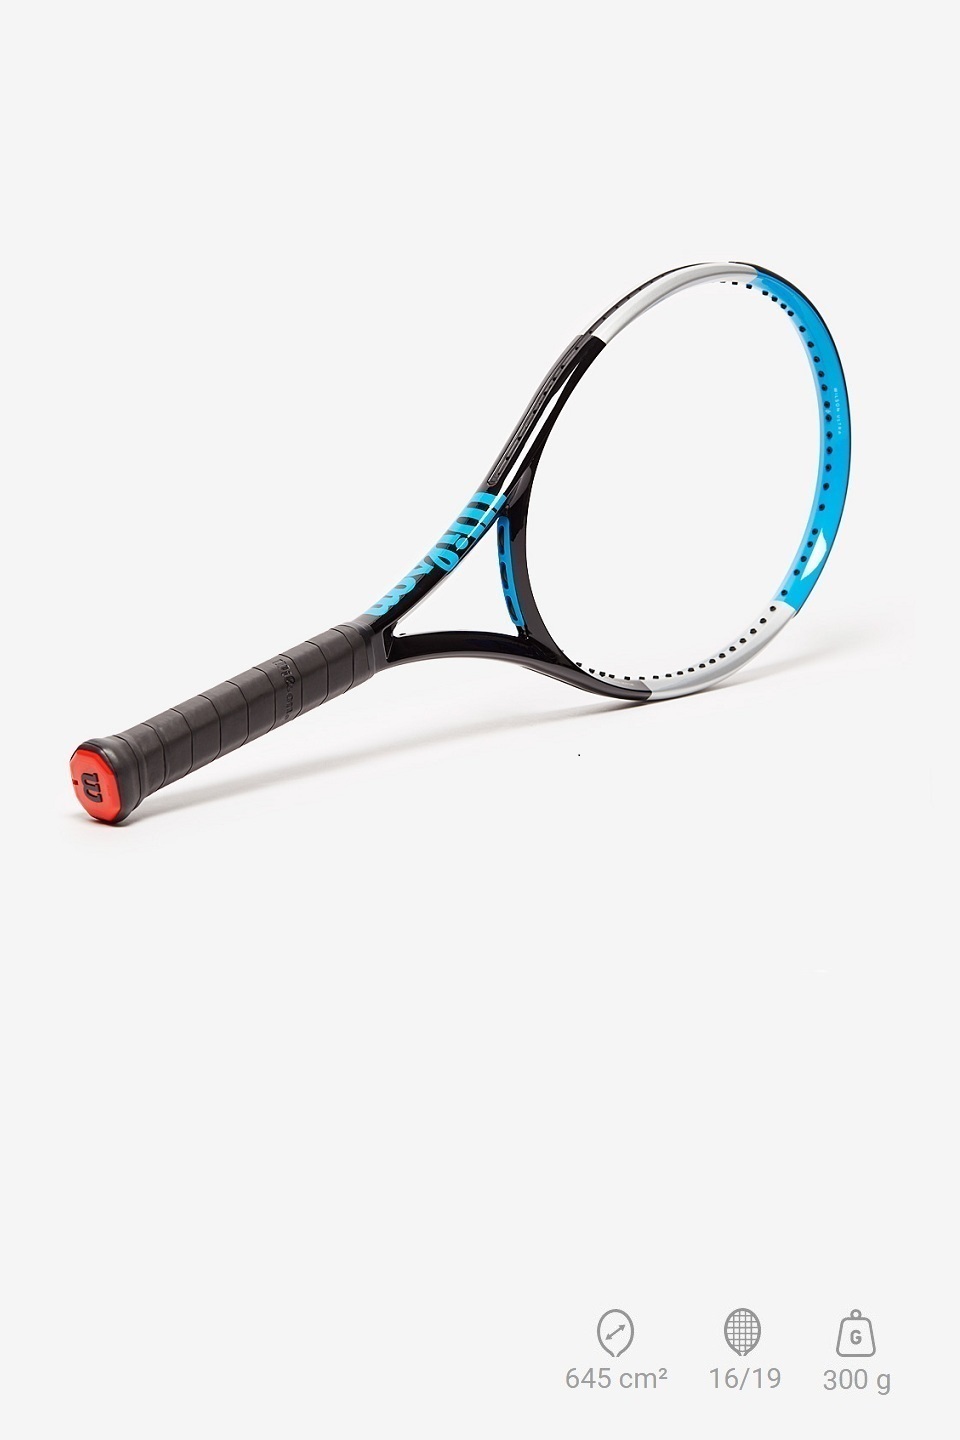 WİLSON - Wilson Ultra 100 V3.0 Tenis Raketi 300 g